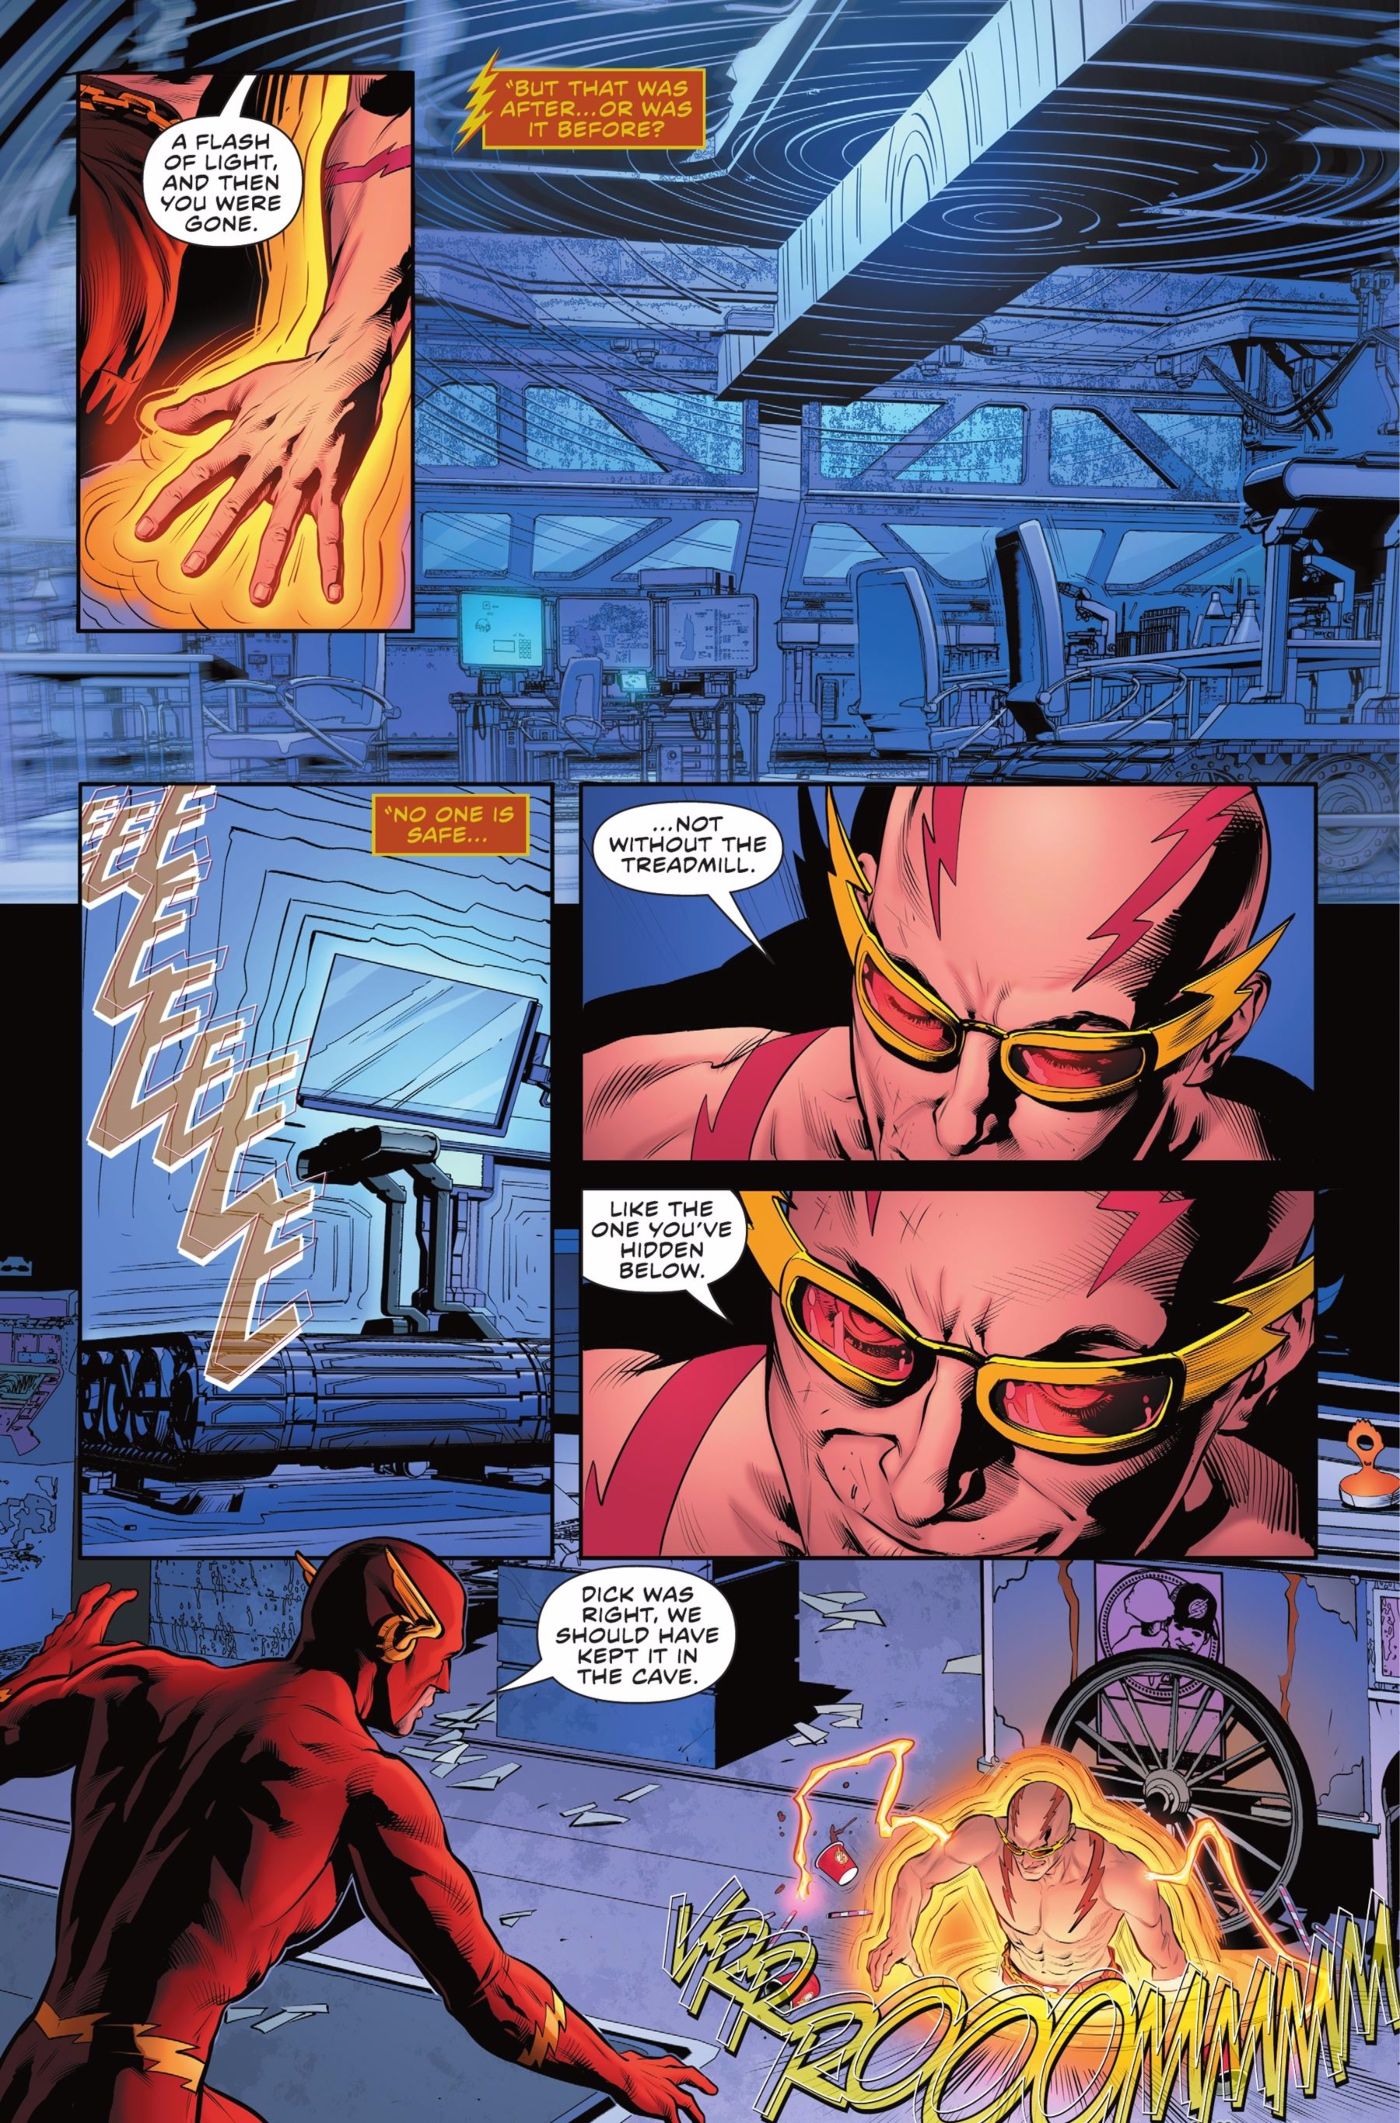 Flash basically has a sixth sense.